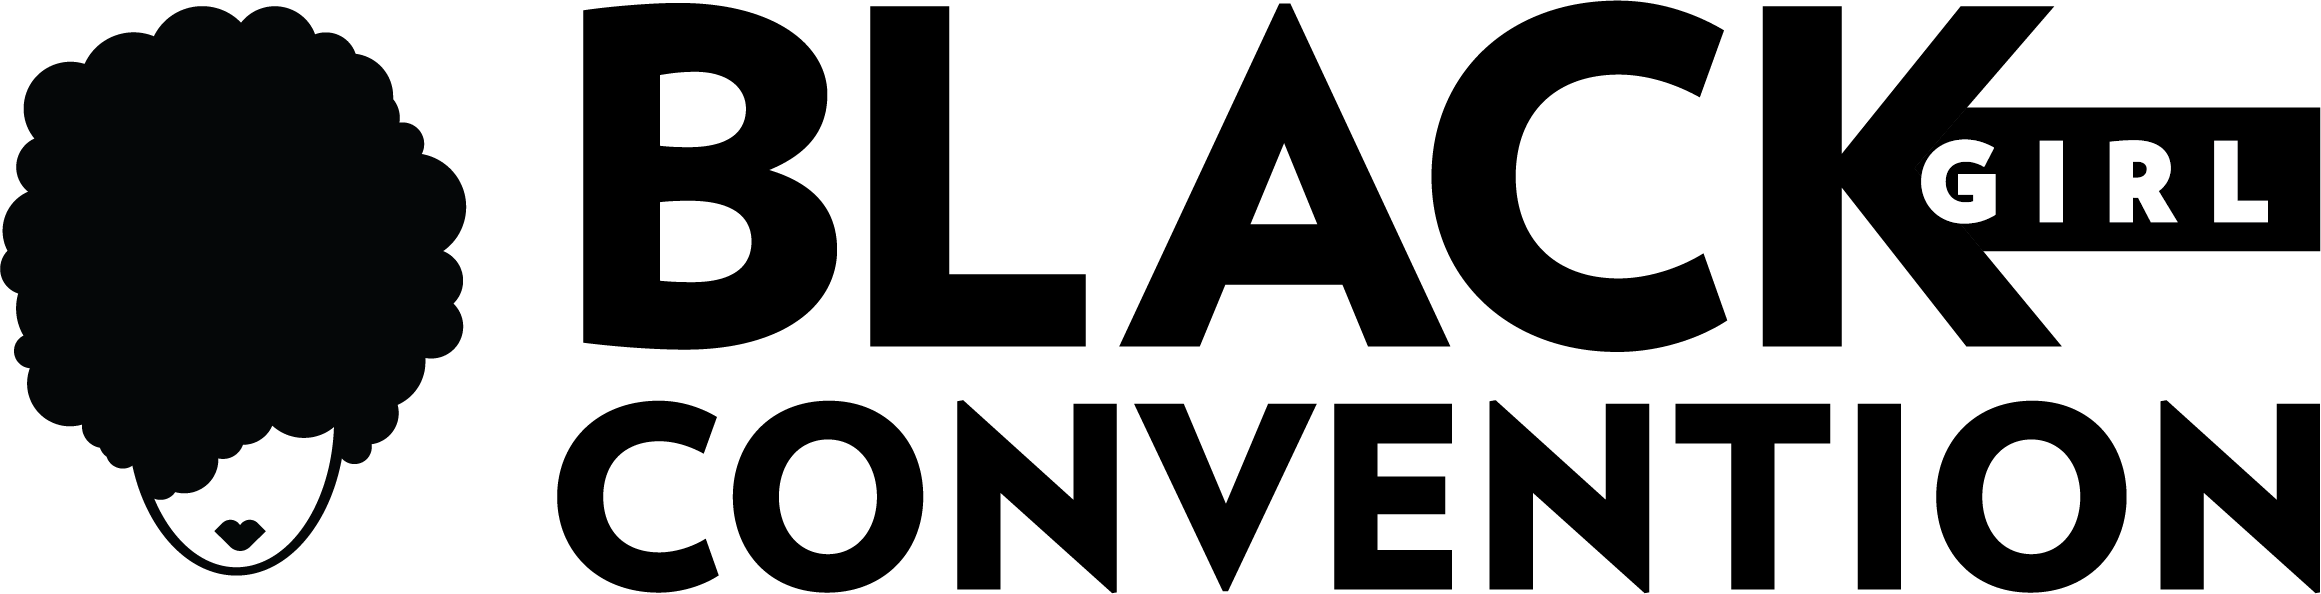 Black Girl Convention logo